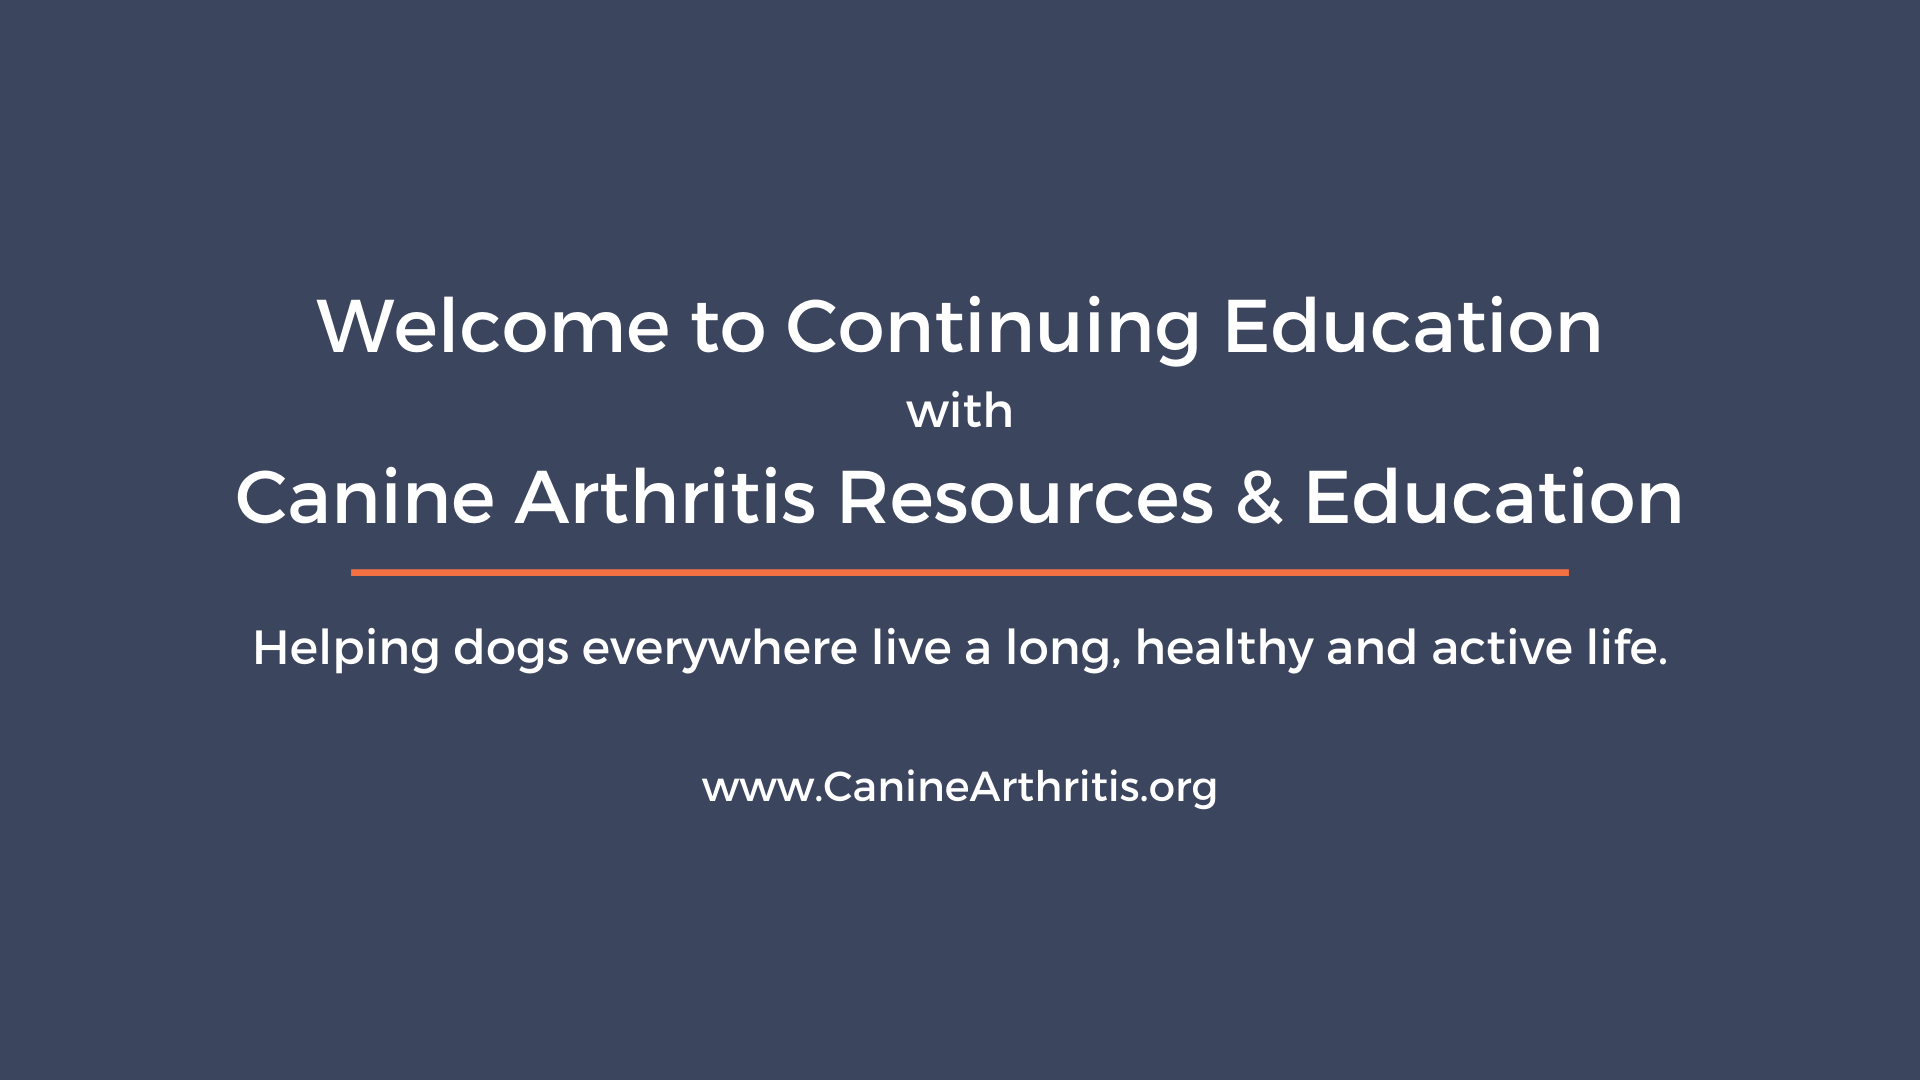 www.CanineArthritis.org